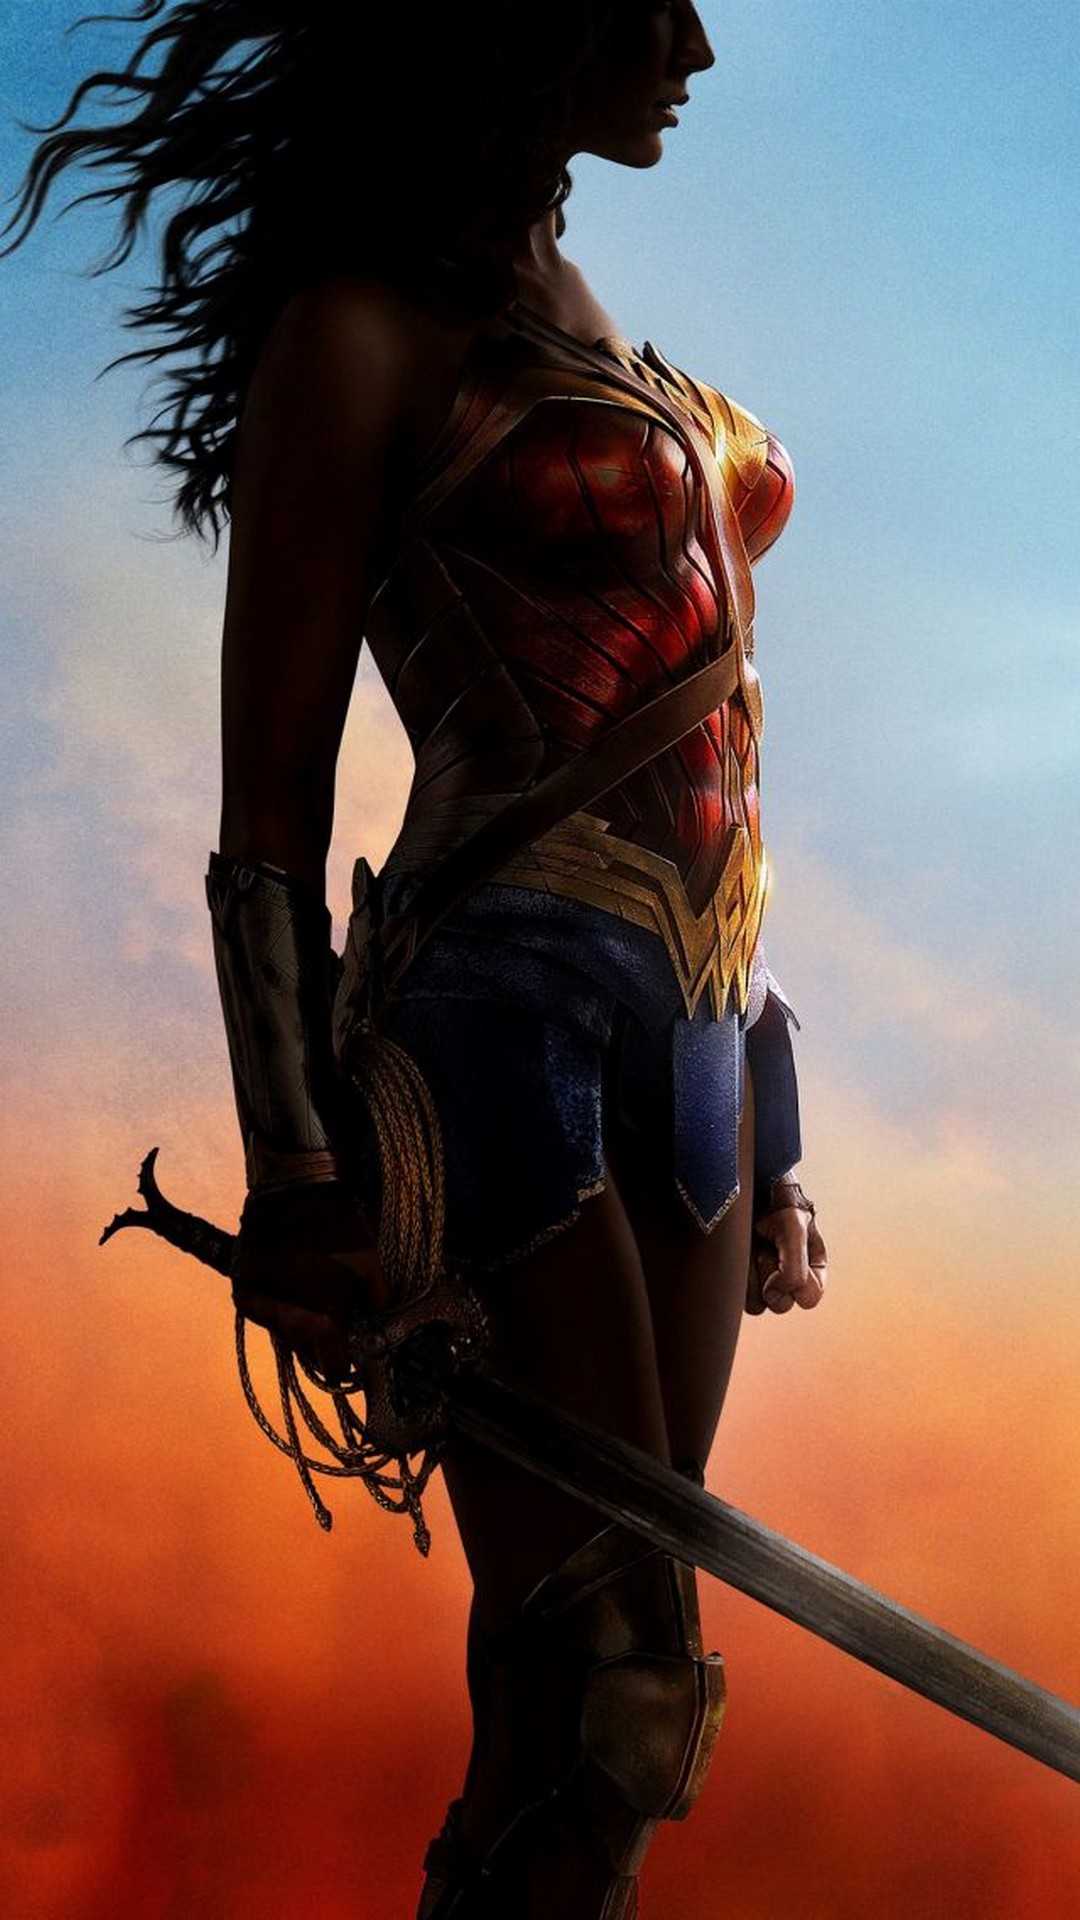 Wonder Woman Wallpaper For Mobile resolution 1080x1920